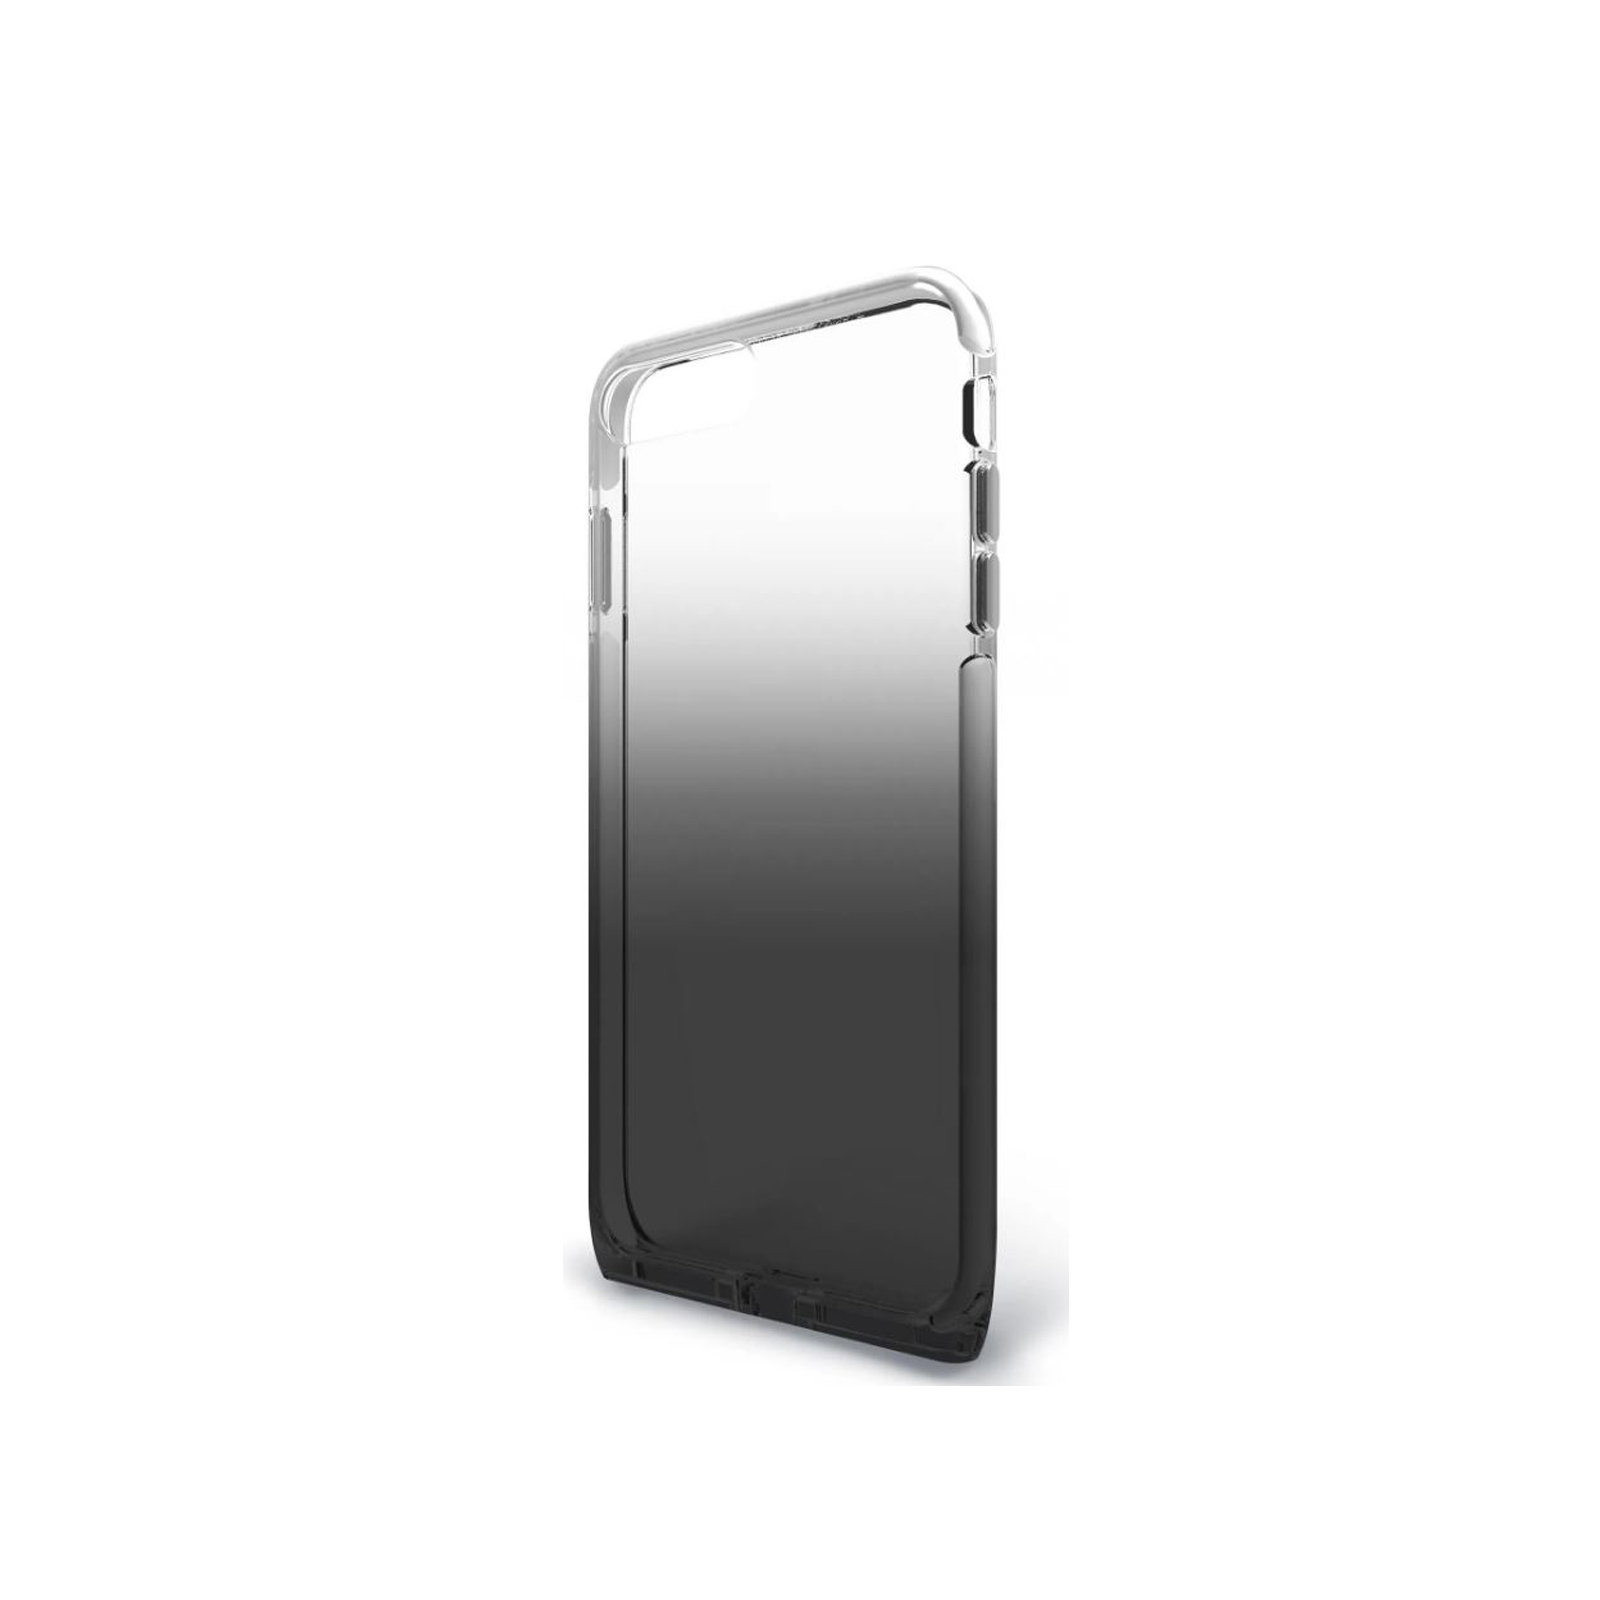 Harmony iPhone 6 Plus / 7 Plus / 8 Plus Clear / Smoke Case Brand New